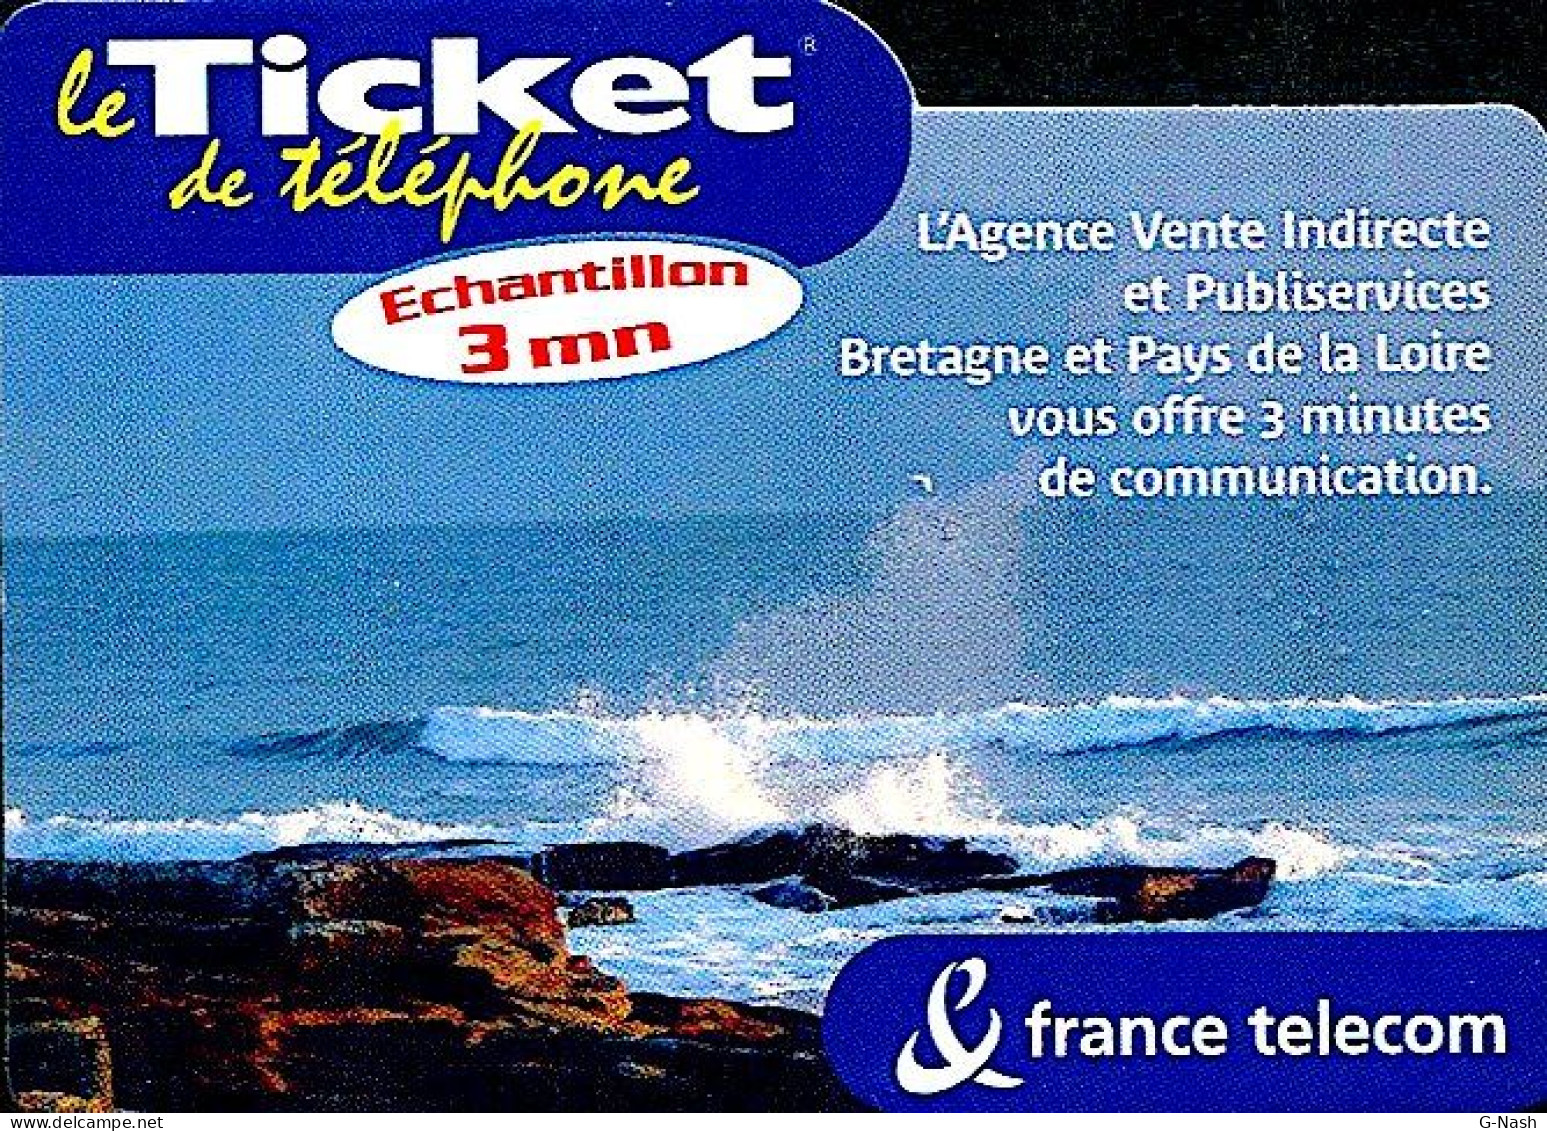 Ticket Téléphone - 07/03/2004 – Bretagne Te Pays De Loire  3mn - Tickets FT